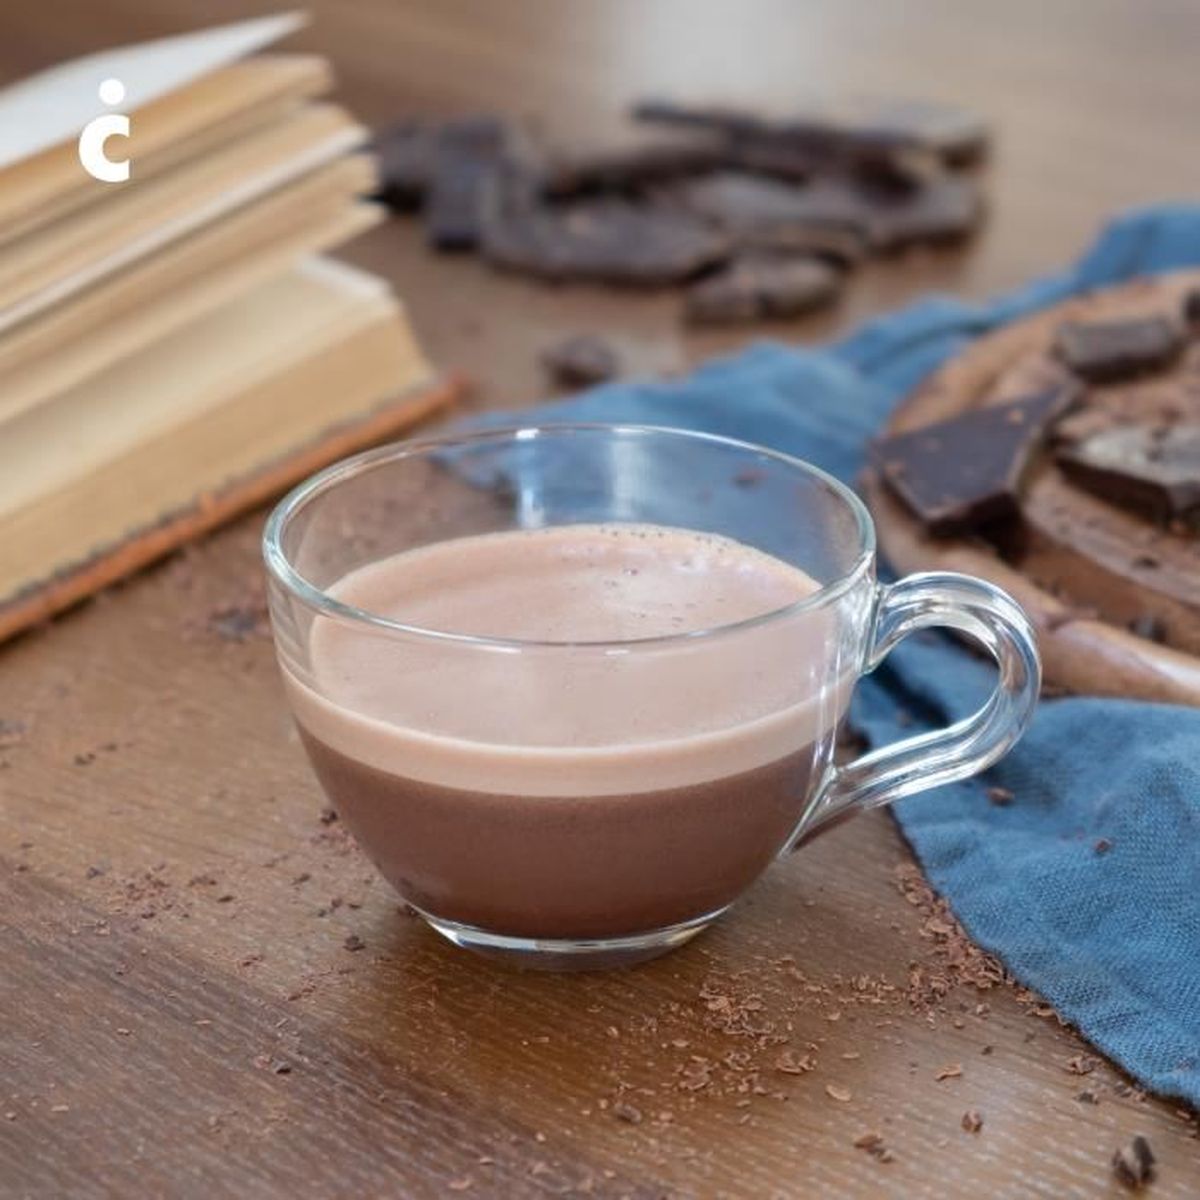 TASSIMO Dosettes de chocolat chaud Suchard 16 dosettes 320g pas cher 